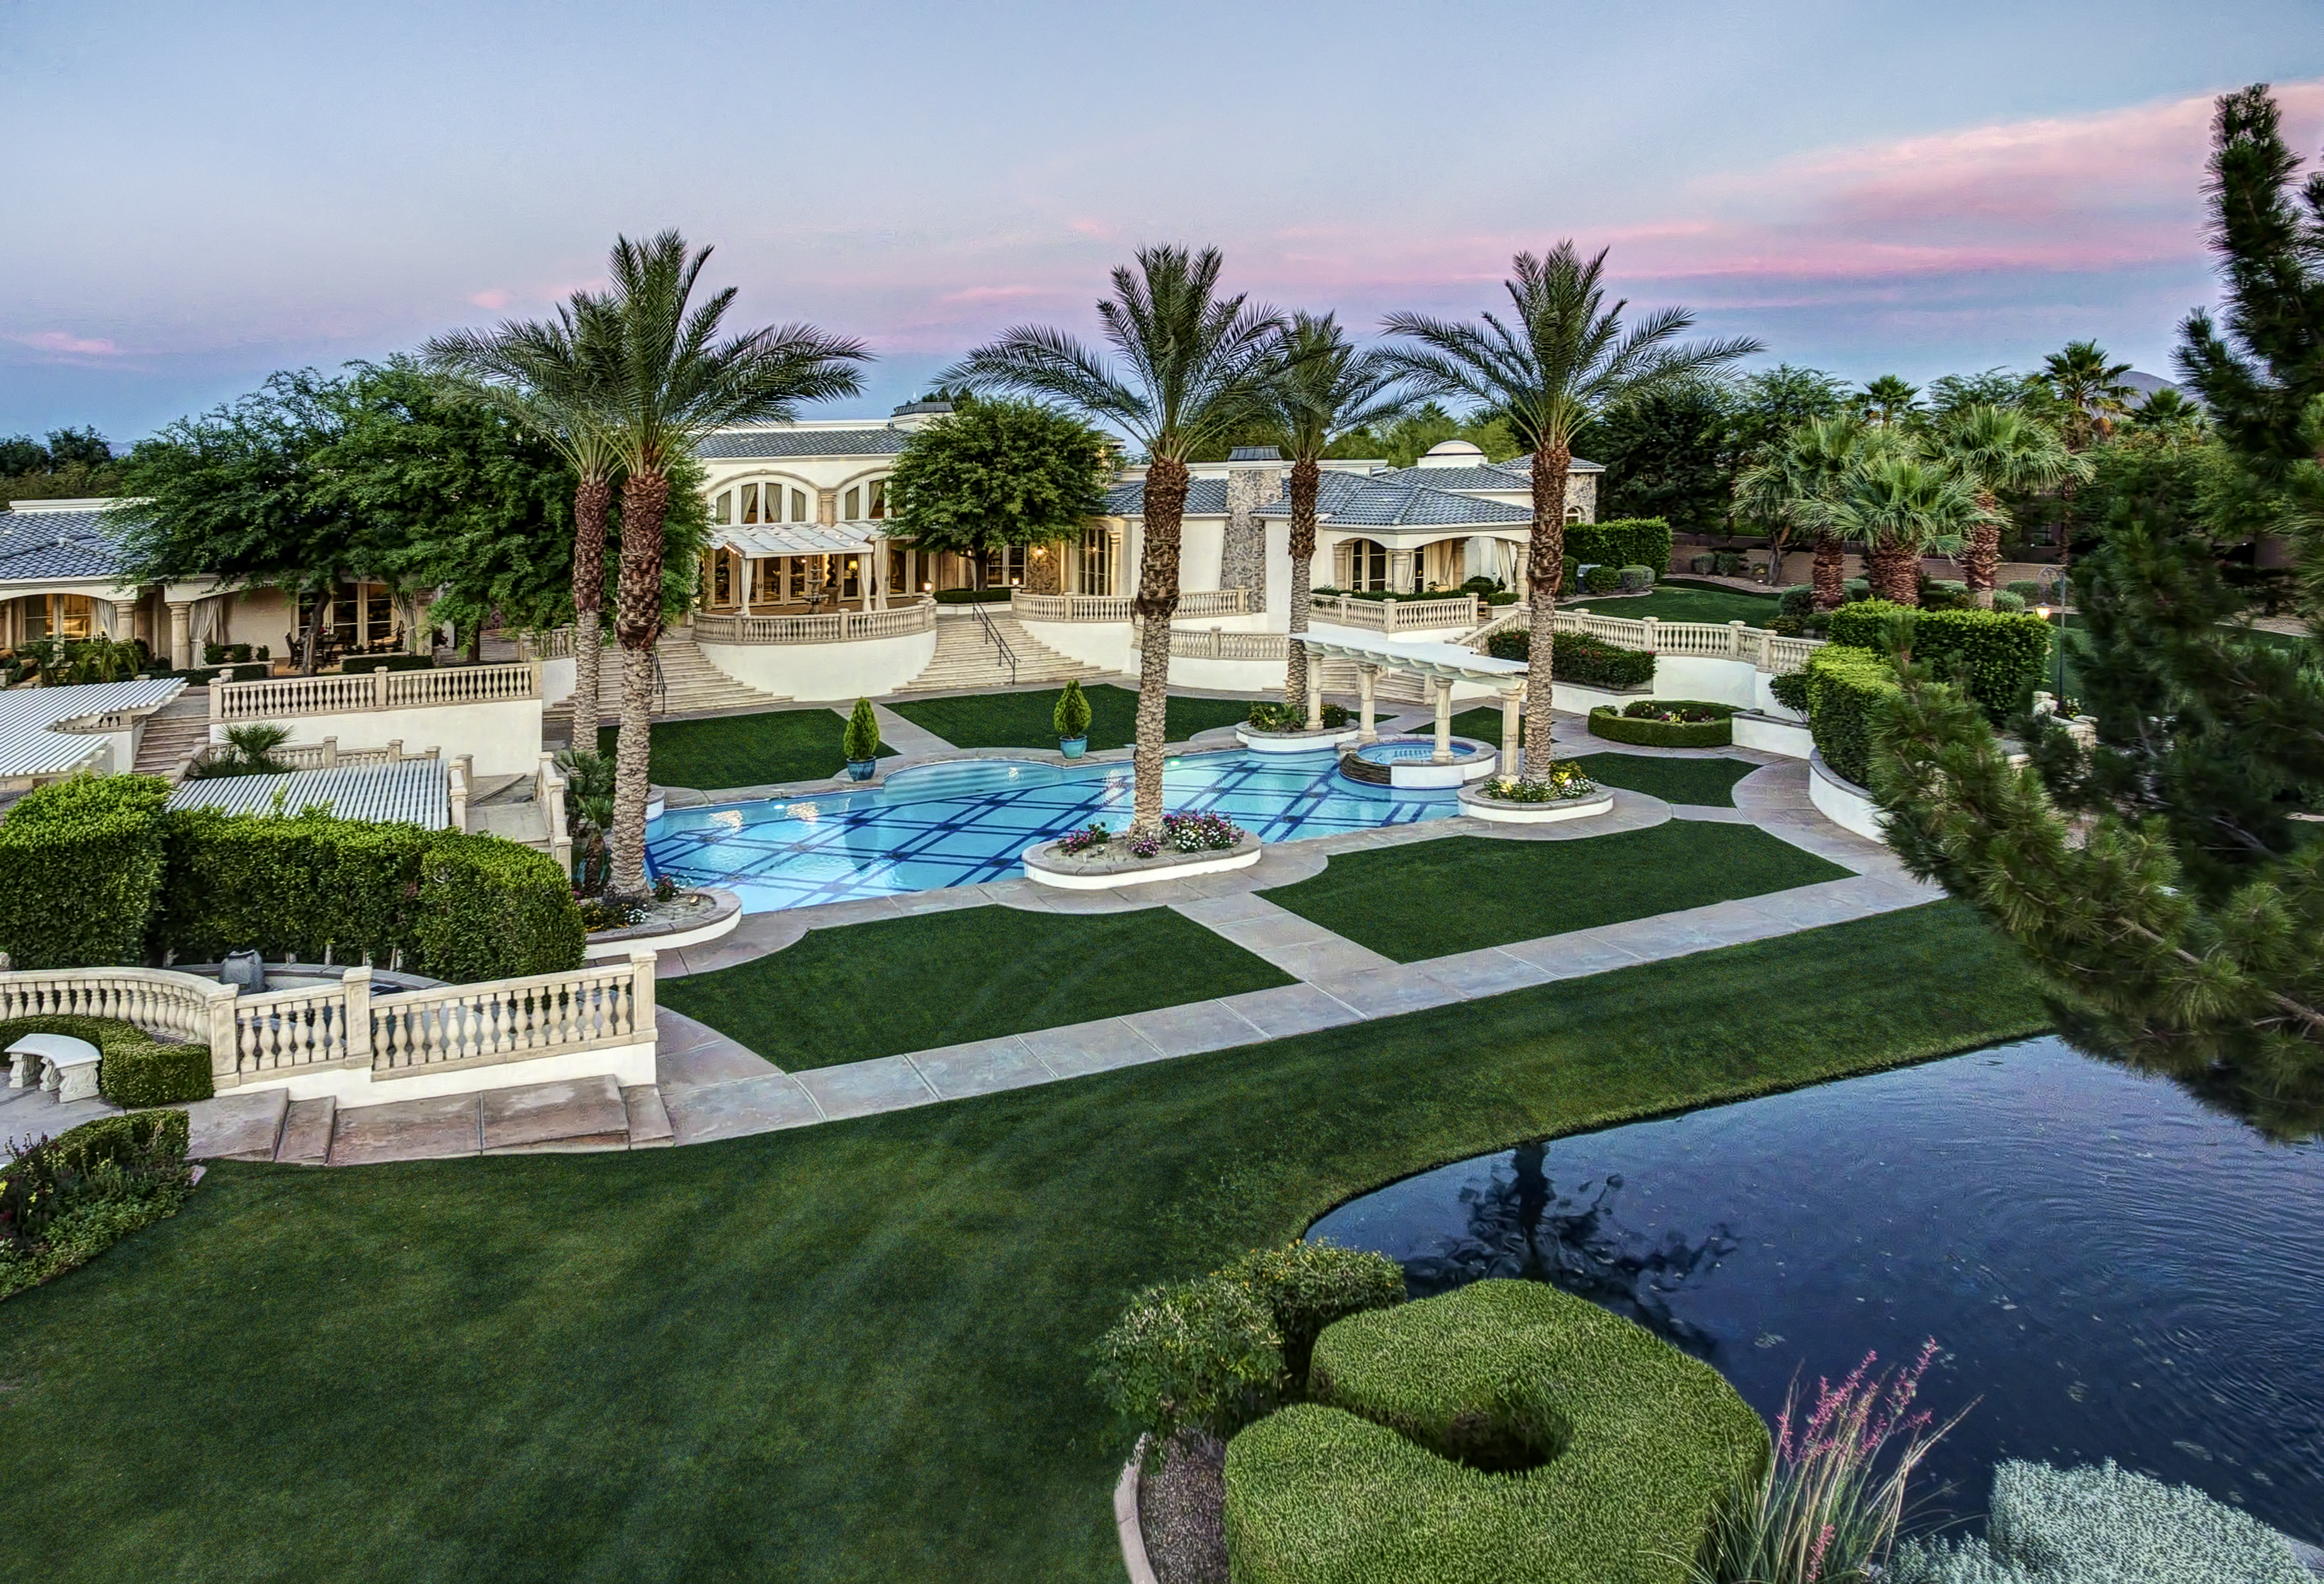 Coco Crisp's Rancho Mirage Estate Seeks $9.995 Million - WSJ